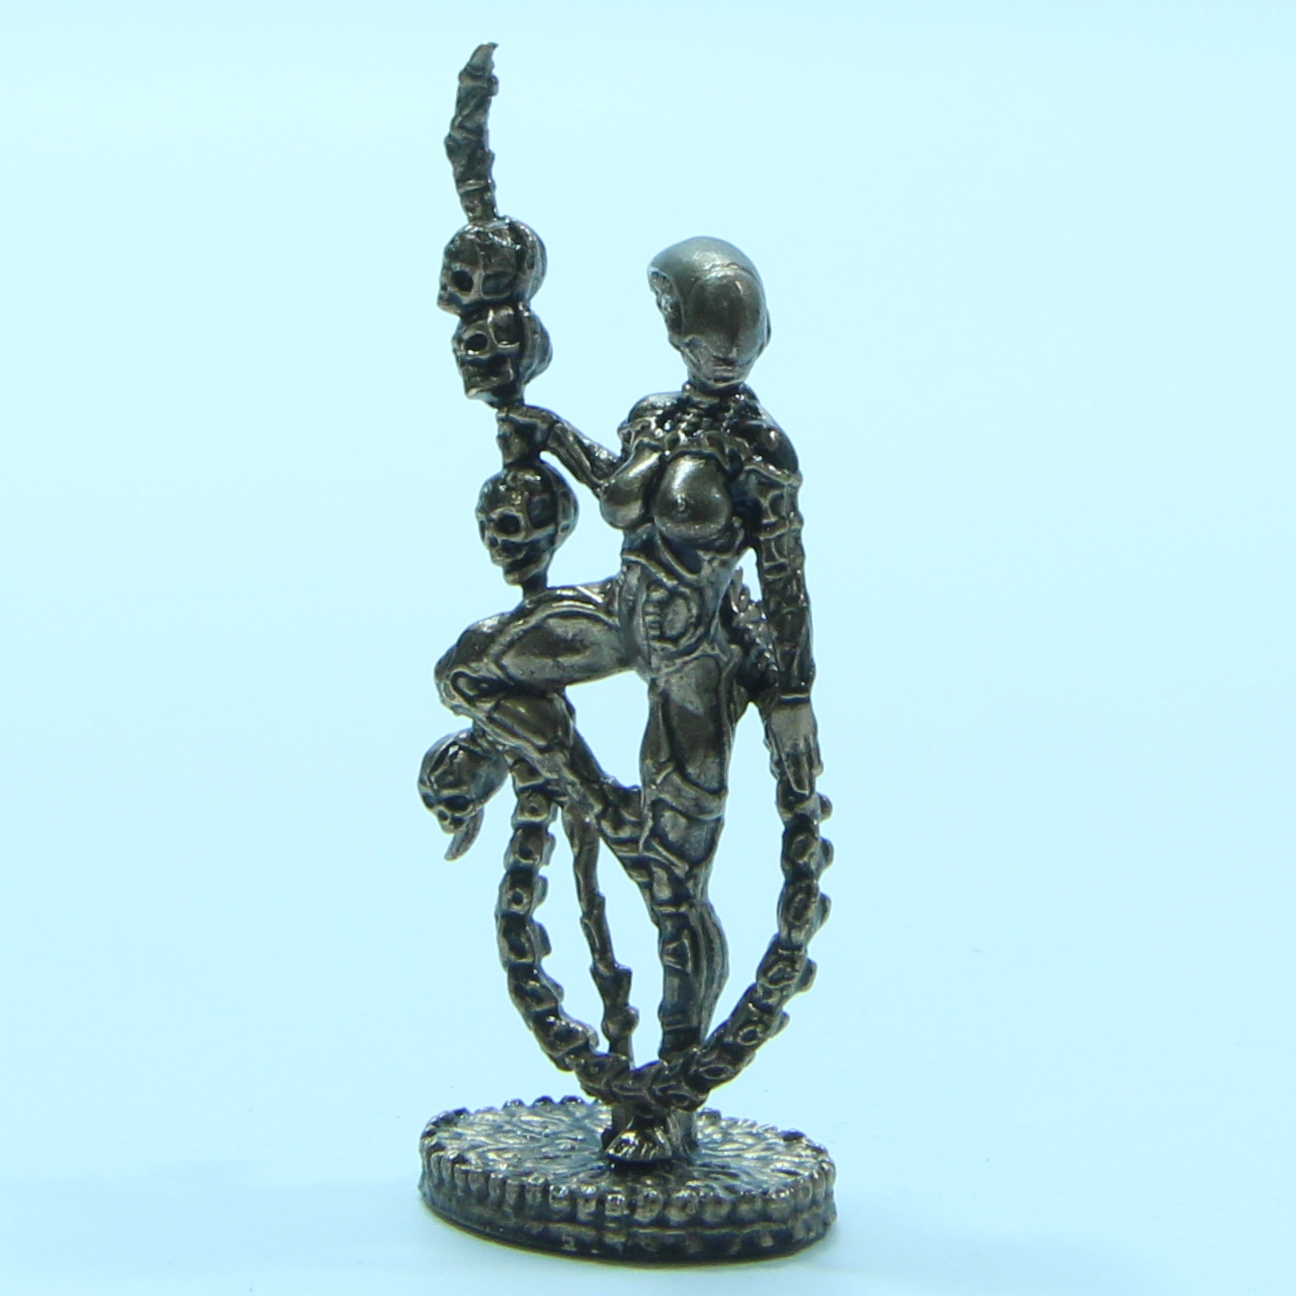 Бронзовая статуэтка Gigergirl скорпион (серия Gigergirls)Фото 15081-02.jpg